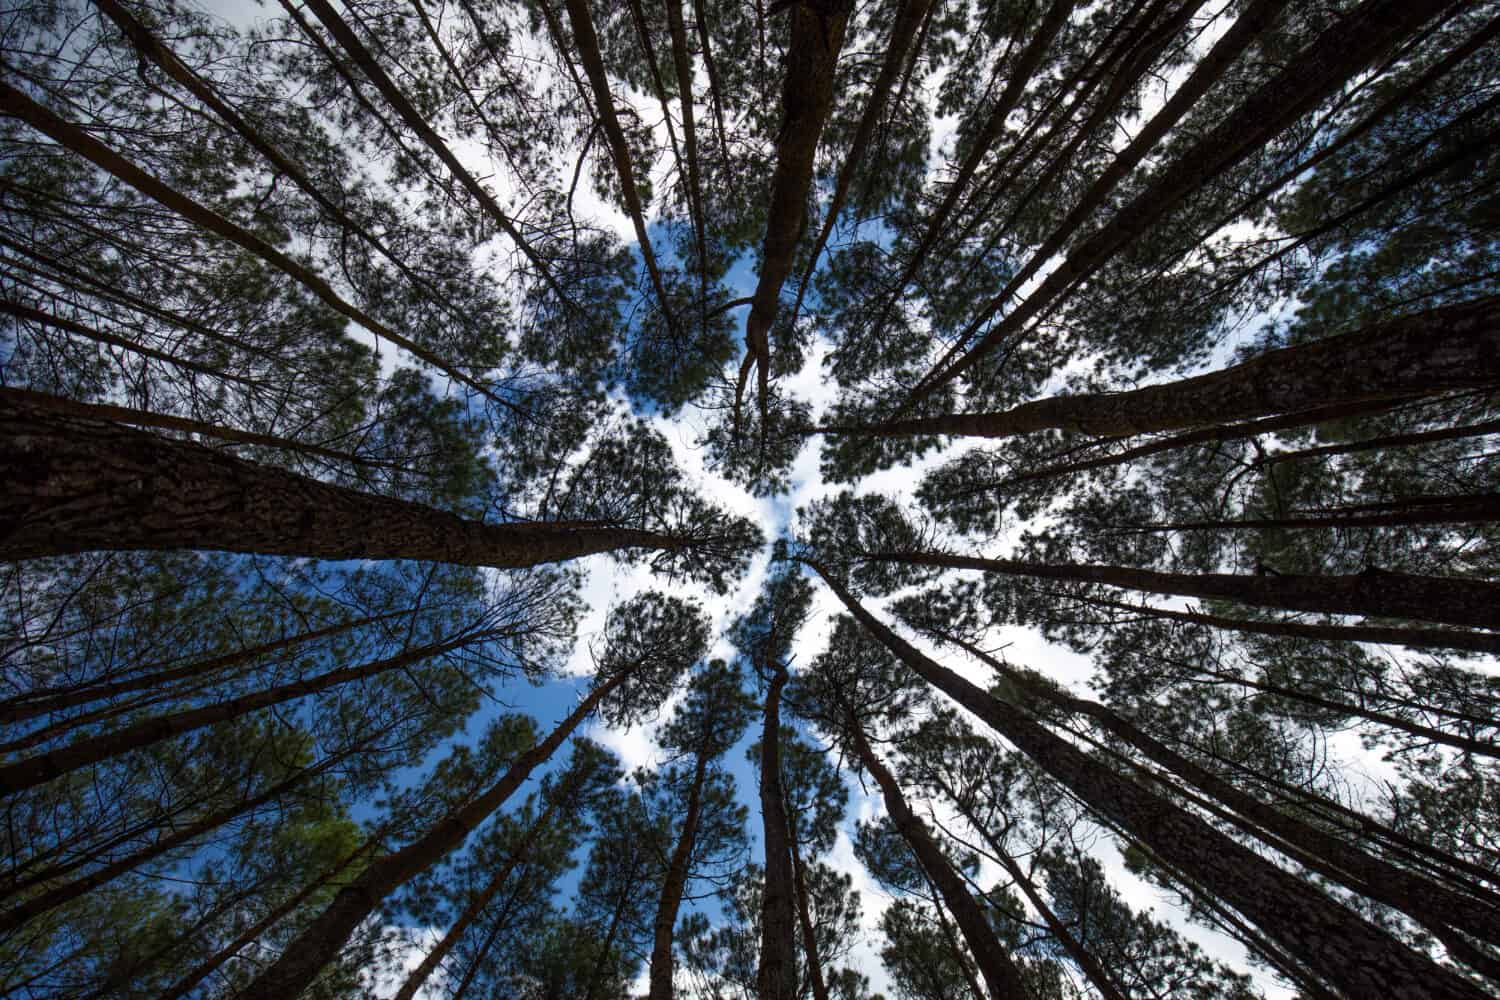 Pine tree showing a phenomenon call crown shyness